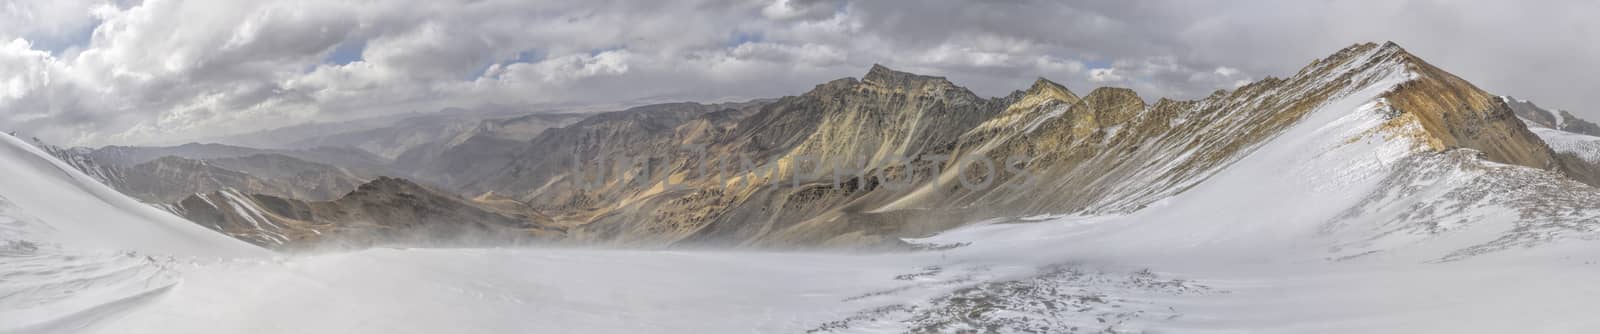 Scenic panorama of cold mountainous landscape of Pamir mountain range  in Tajikistan